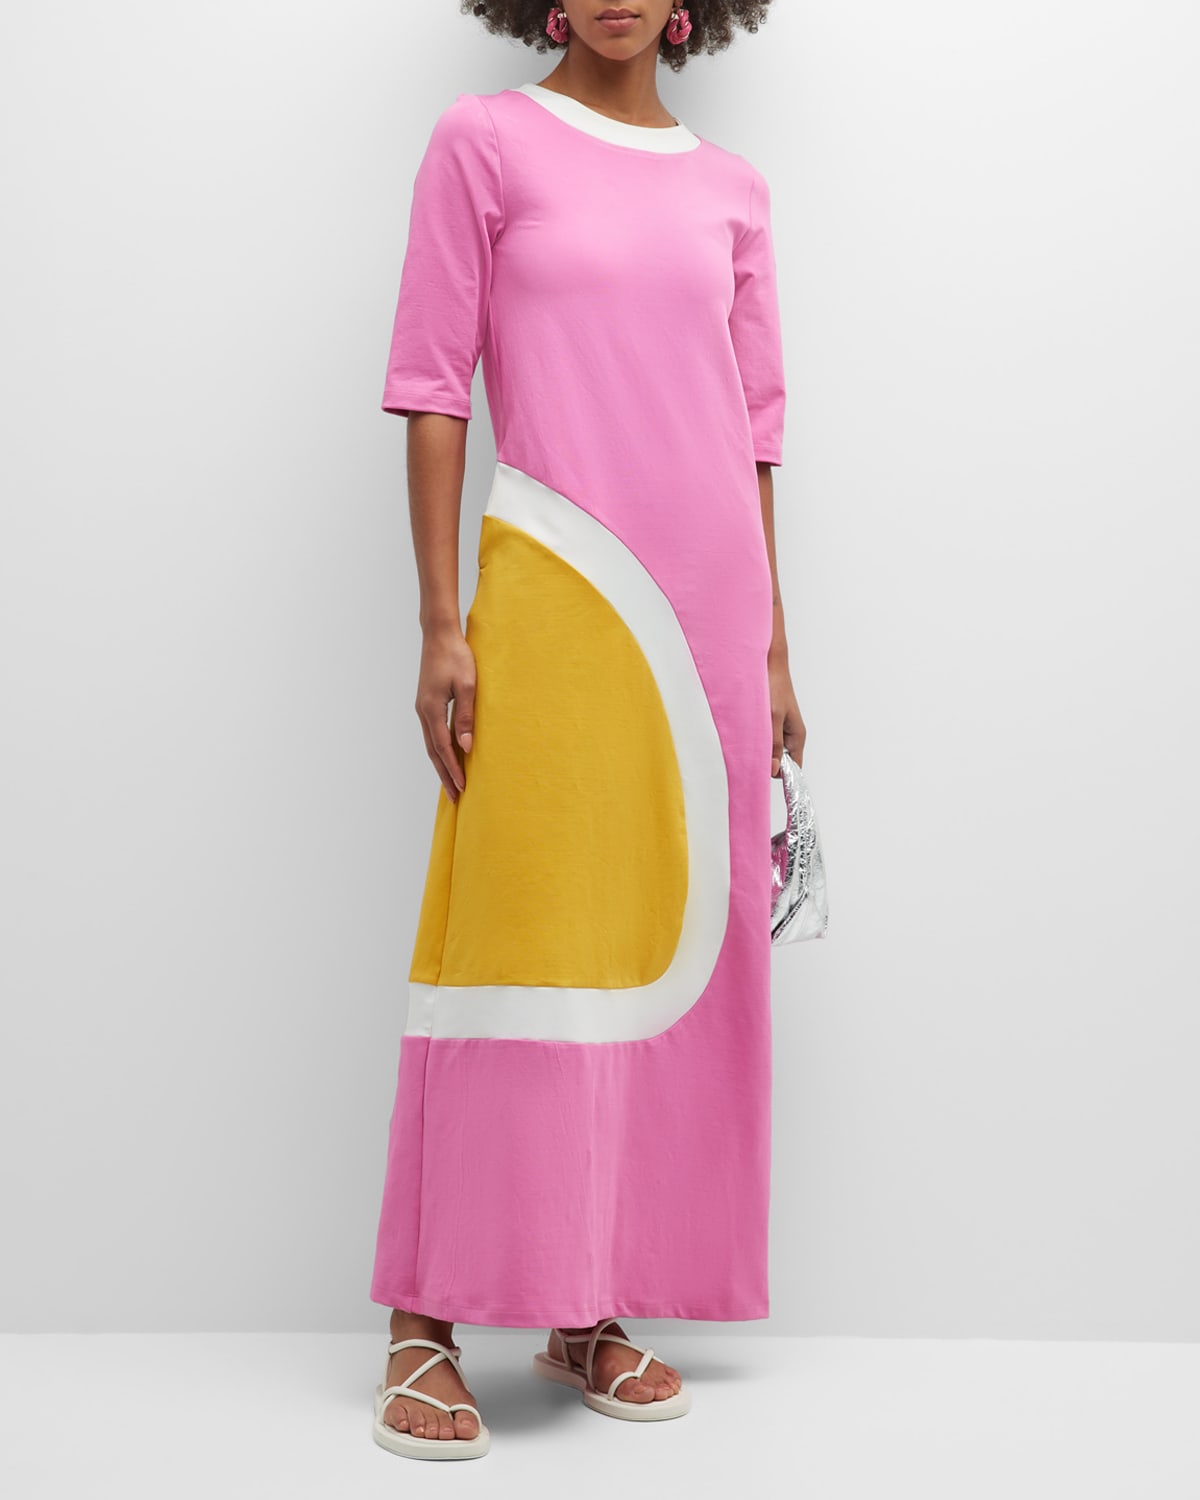 Frances Valentine Groovy Colorblock 3/4-Sleeve Maxi Dress